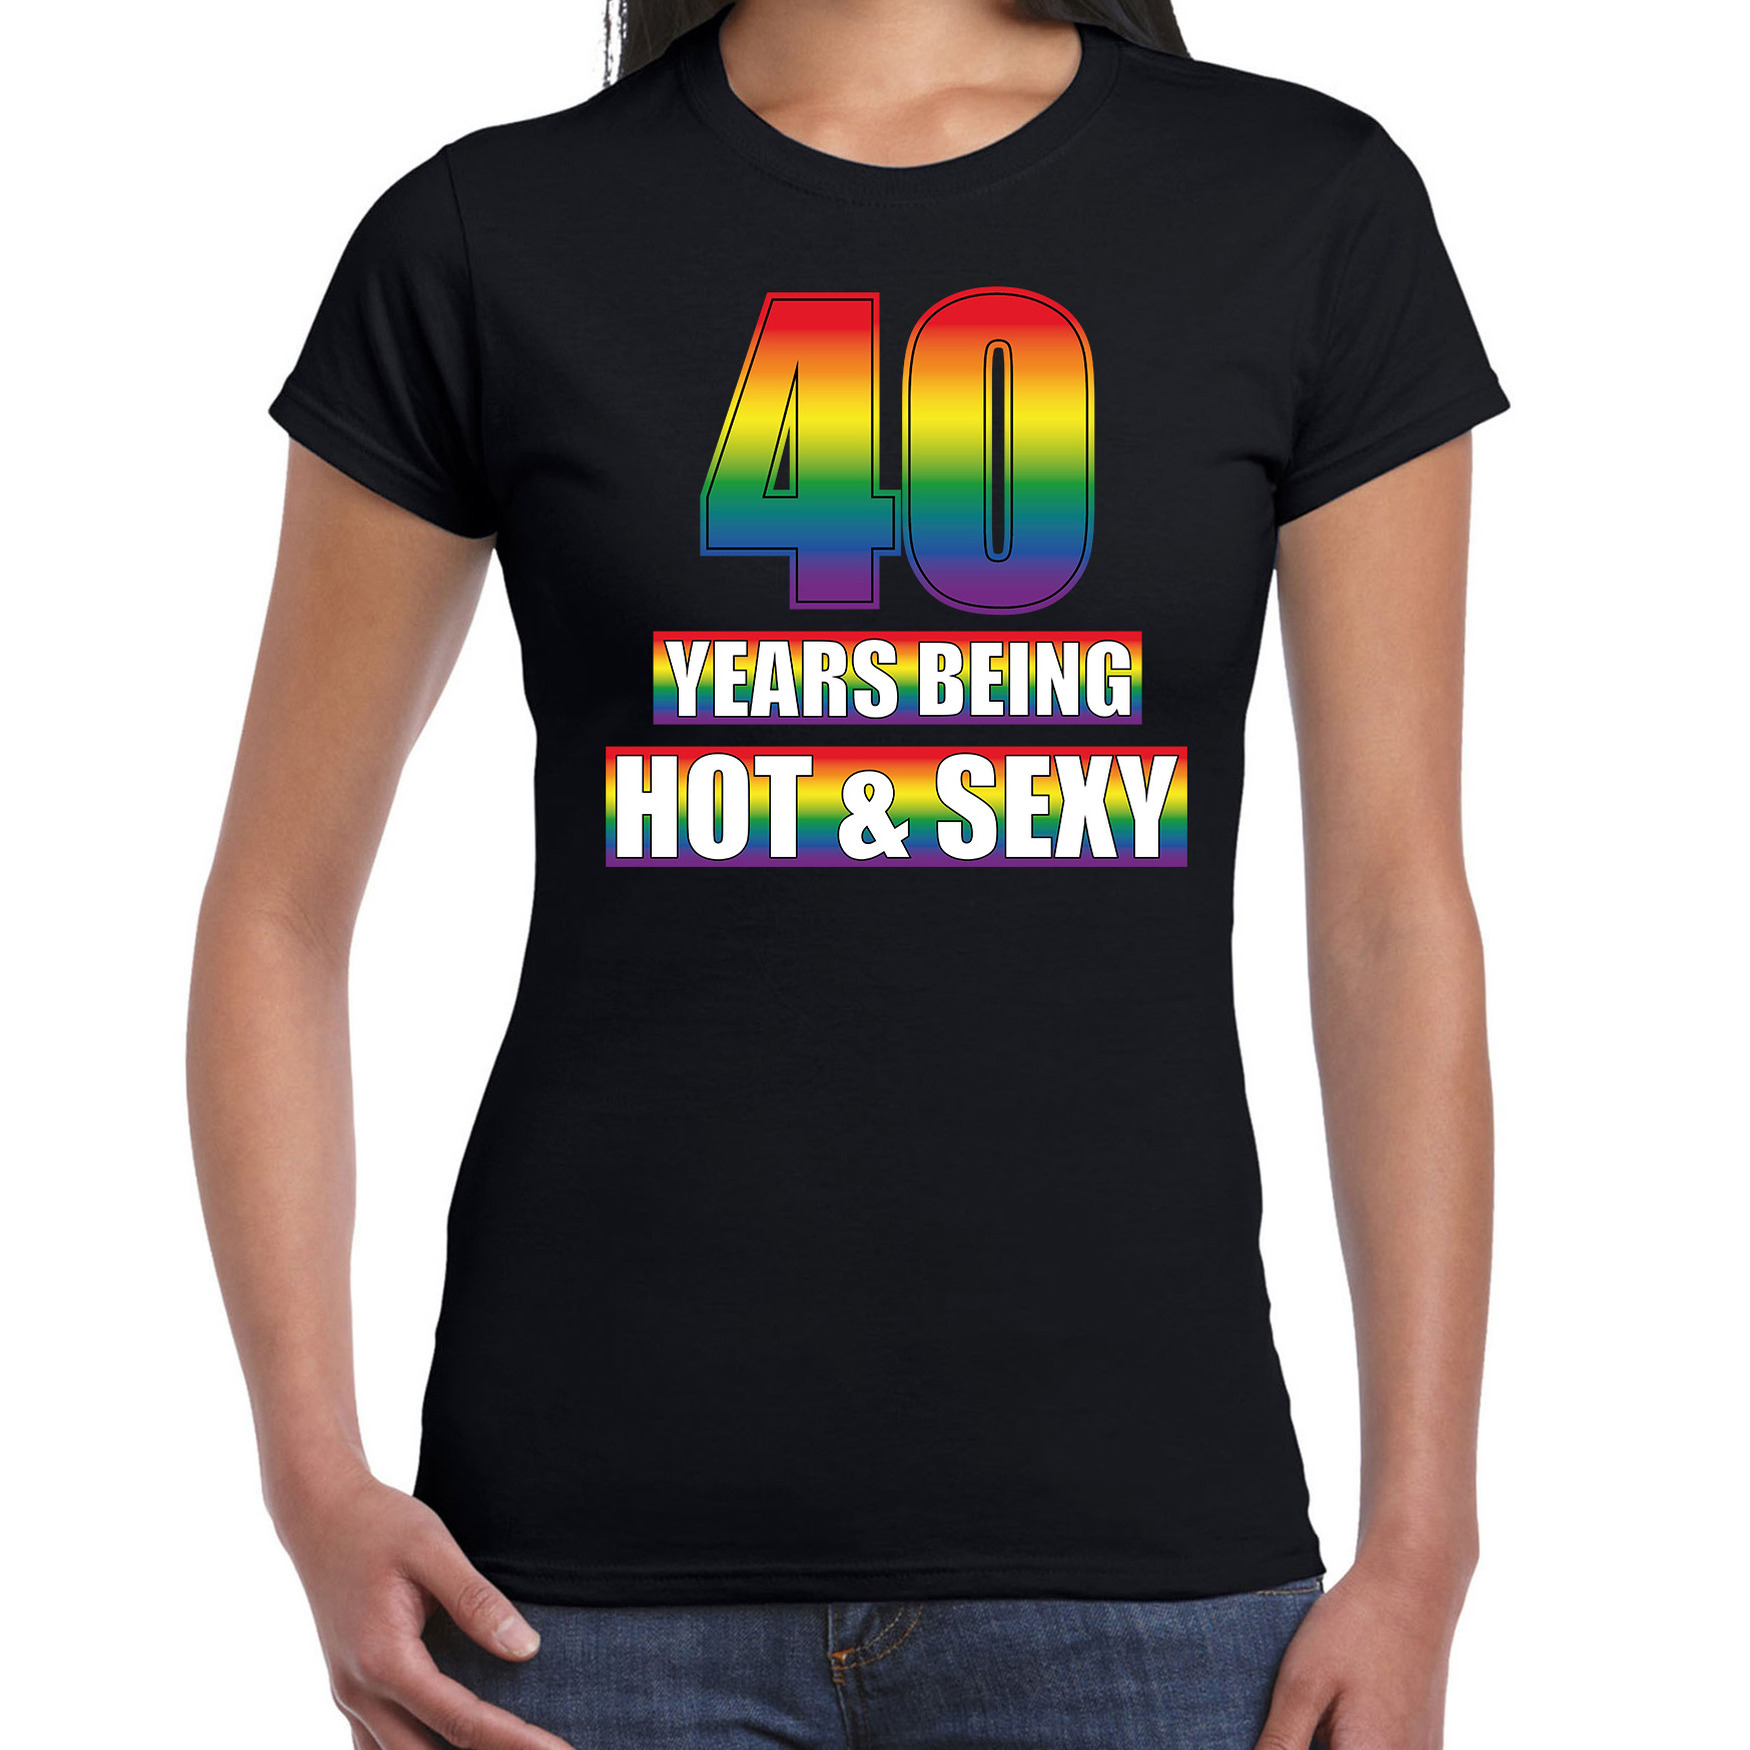 Hot en sexy 40 jaar verjaardag cadeau t-shirt zwart voor dames Gay- LHBT kleding-outfit